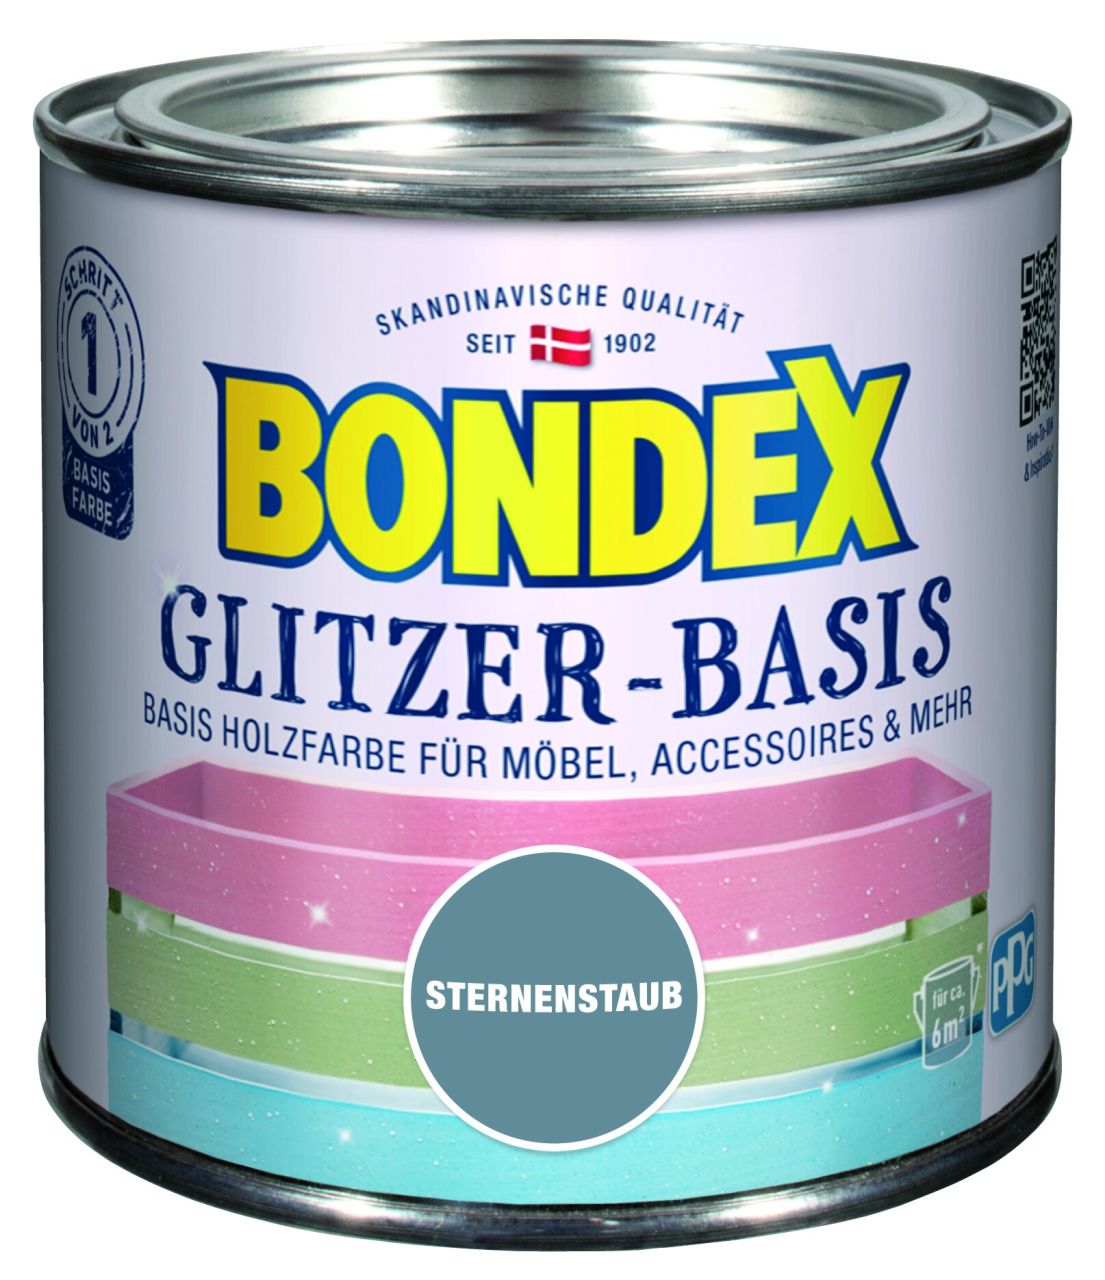 Bondex Glitzer-Basis 500 ml basis sternenstb von Bondex